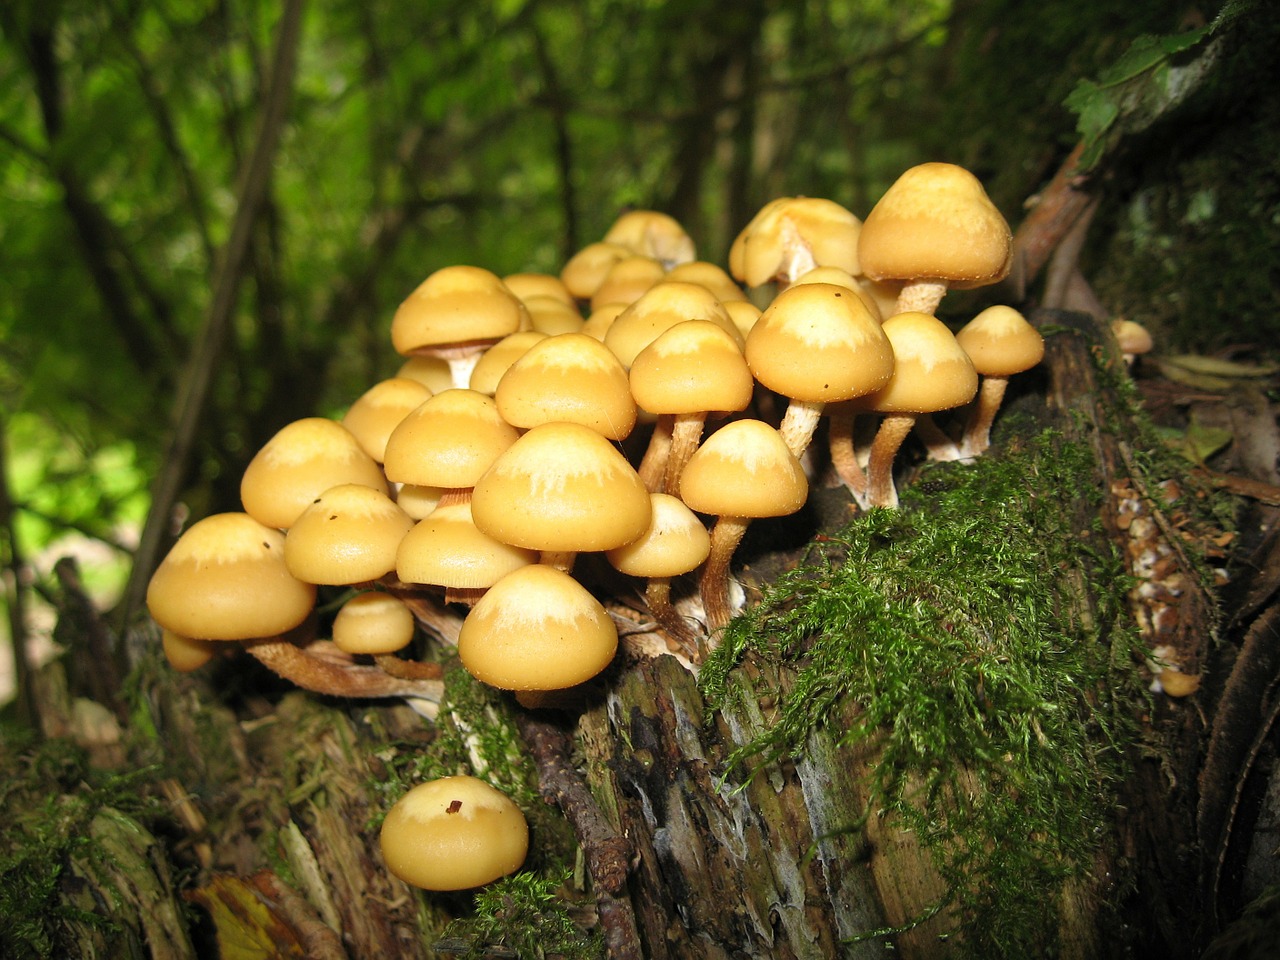 nameko mushrooms kuehneromyces mutabilis free photo